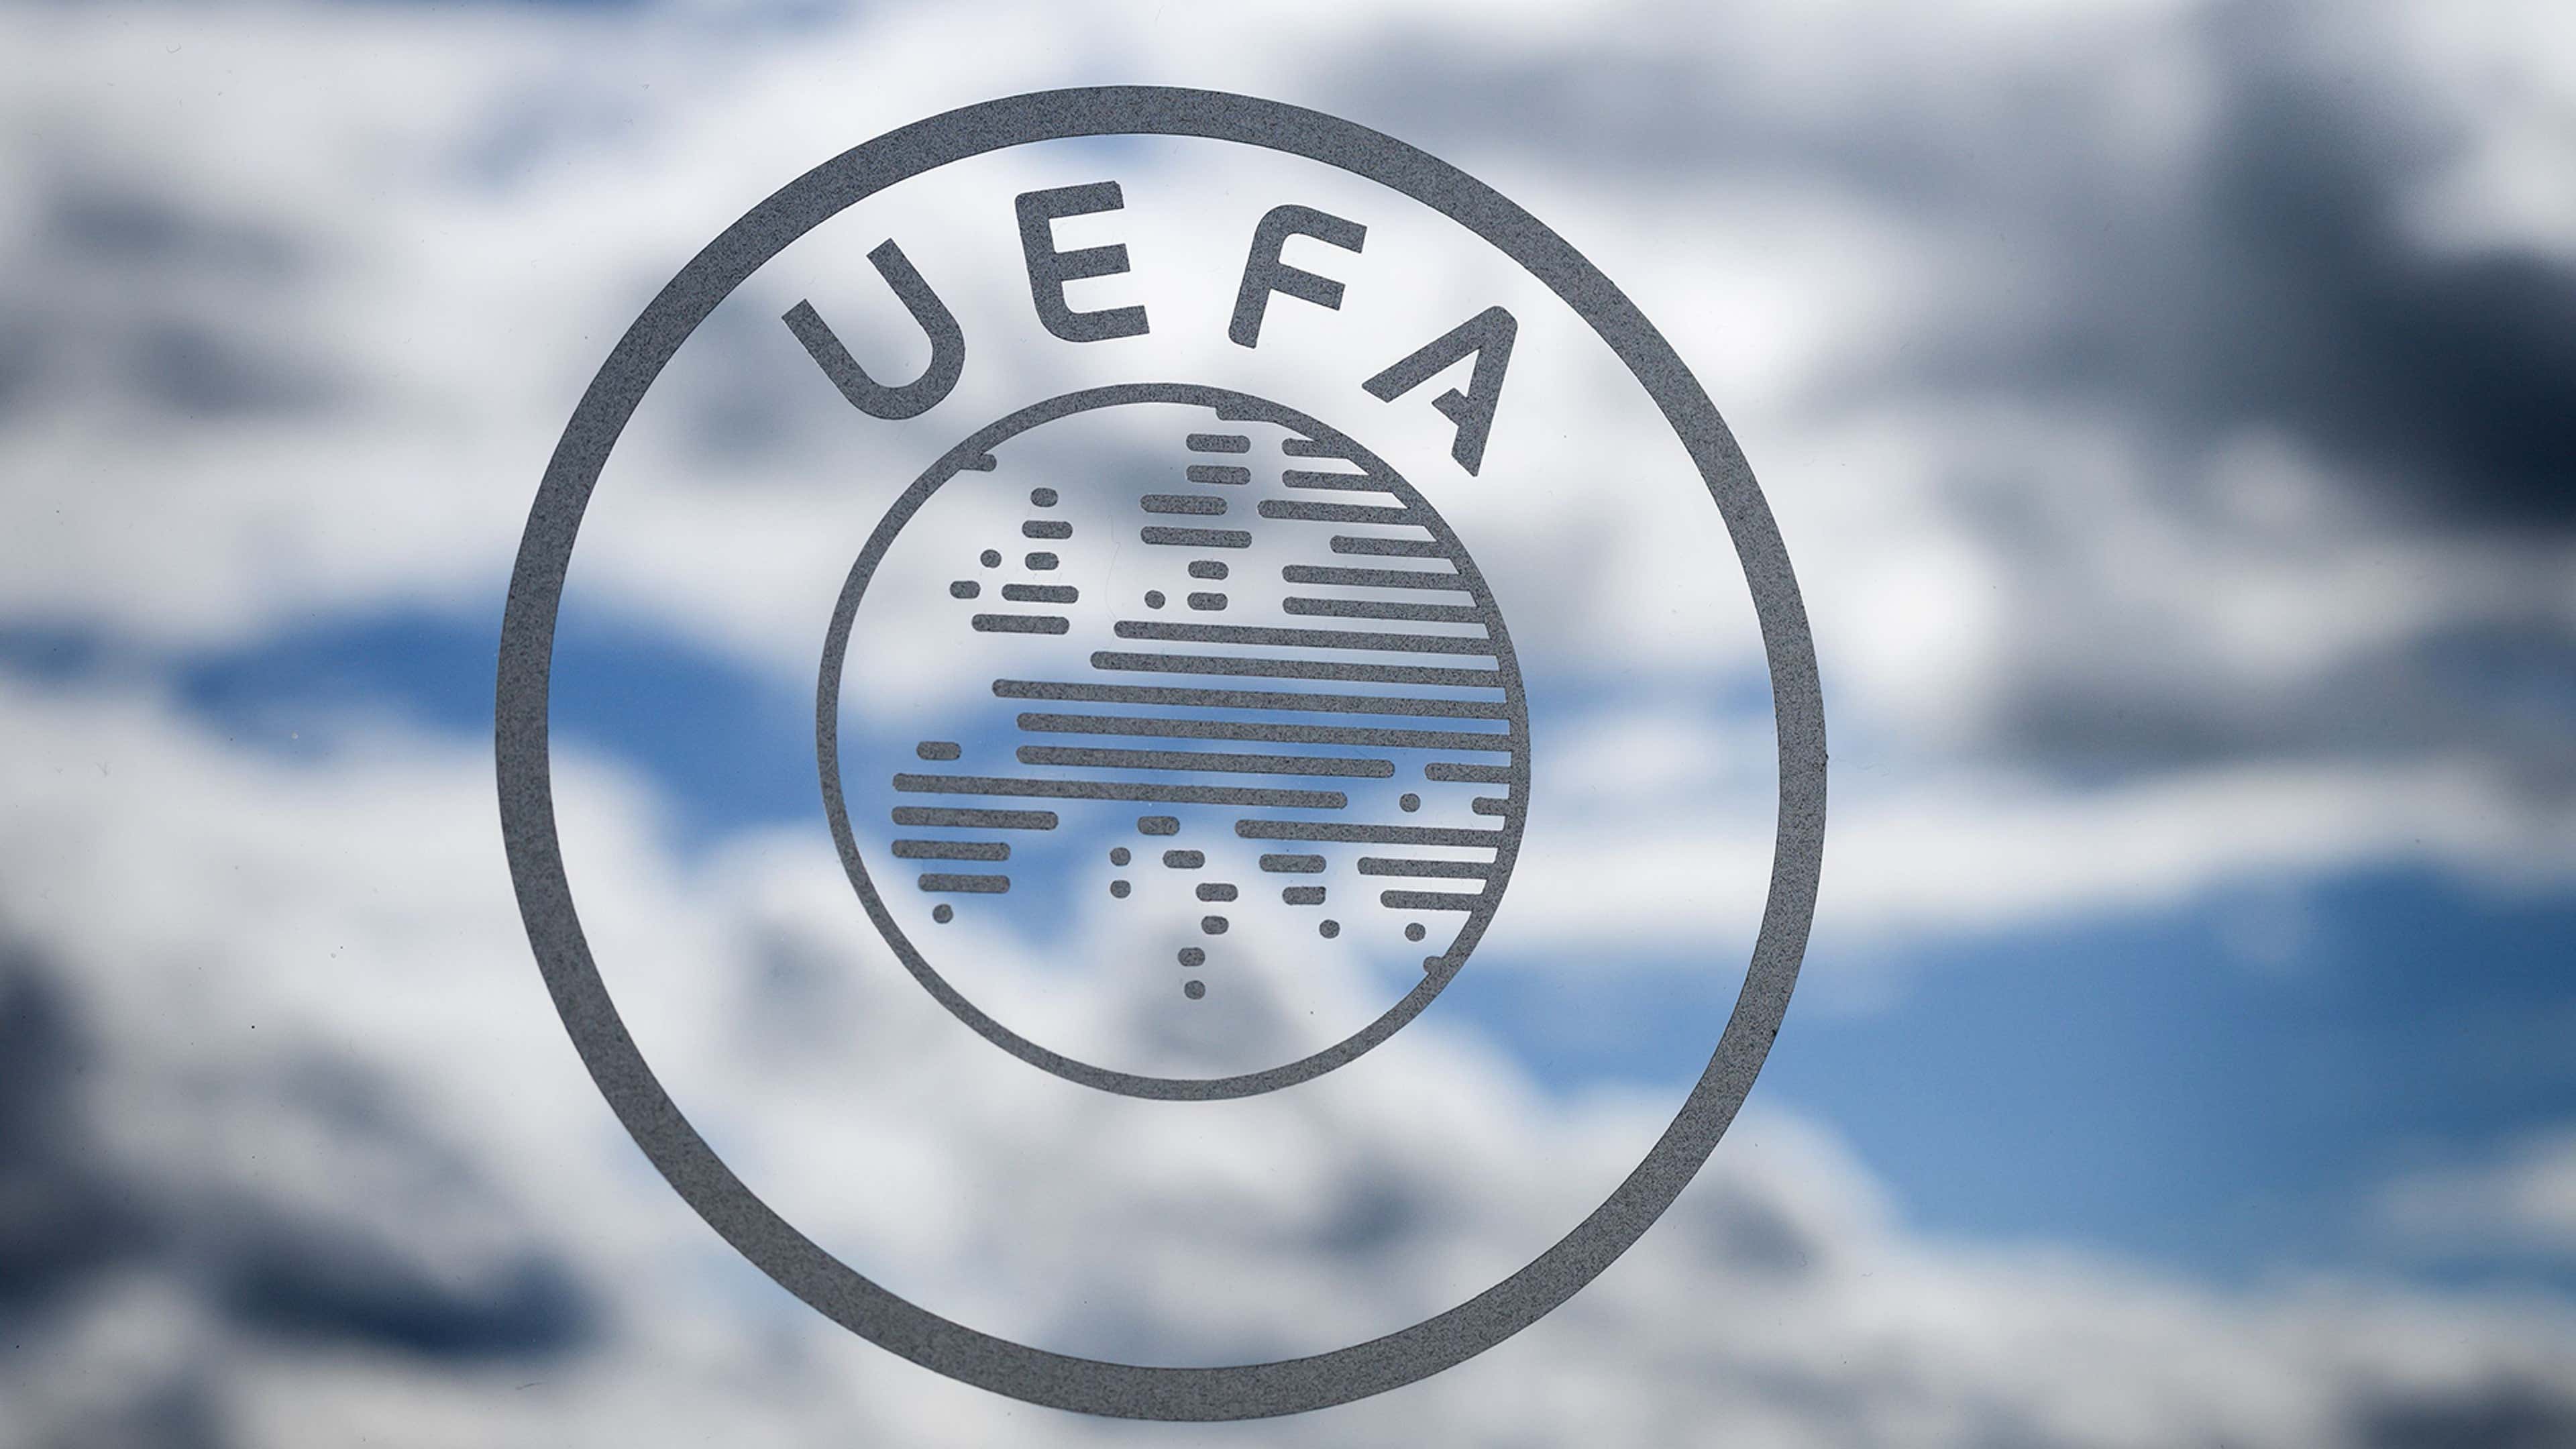 uefa logo png